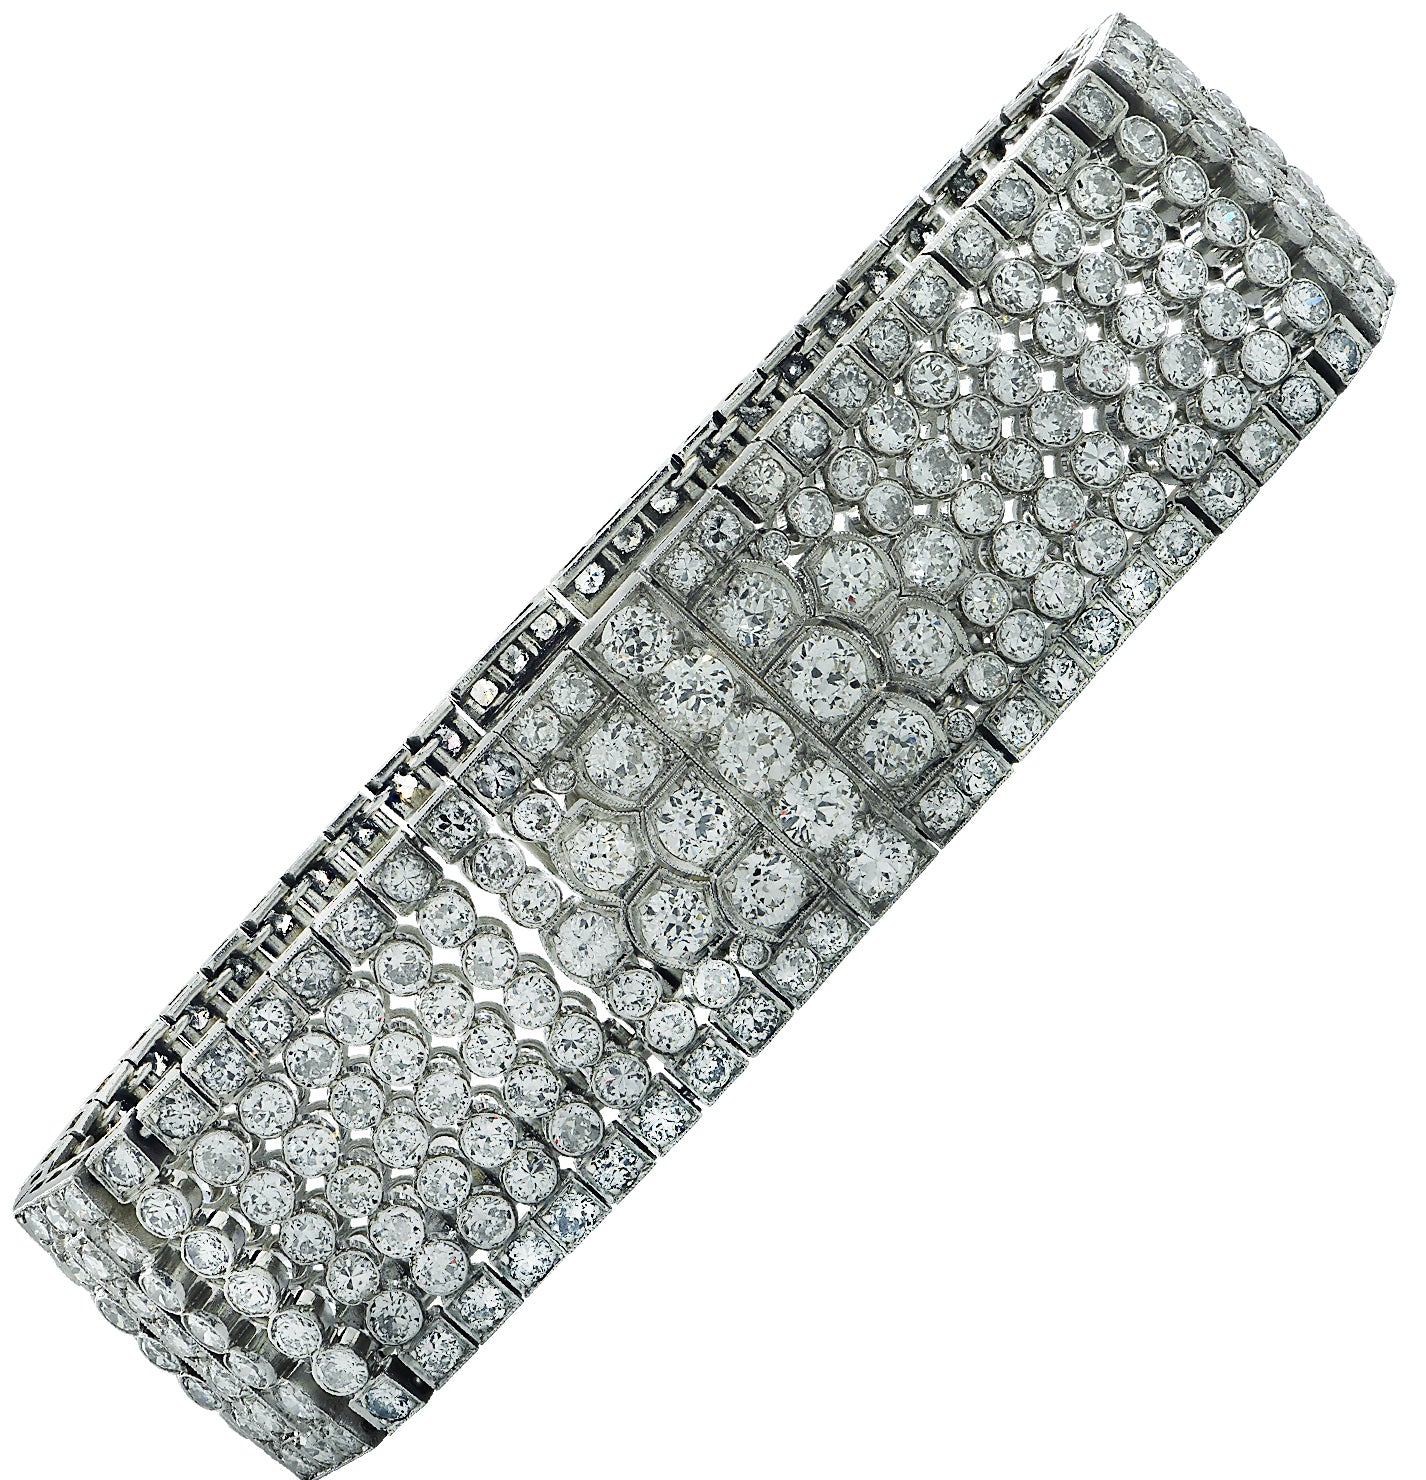 8 Carat Diamond Tennis Bracelet set in White Gold